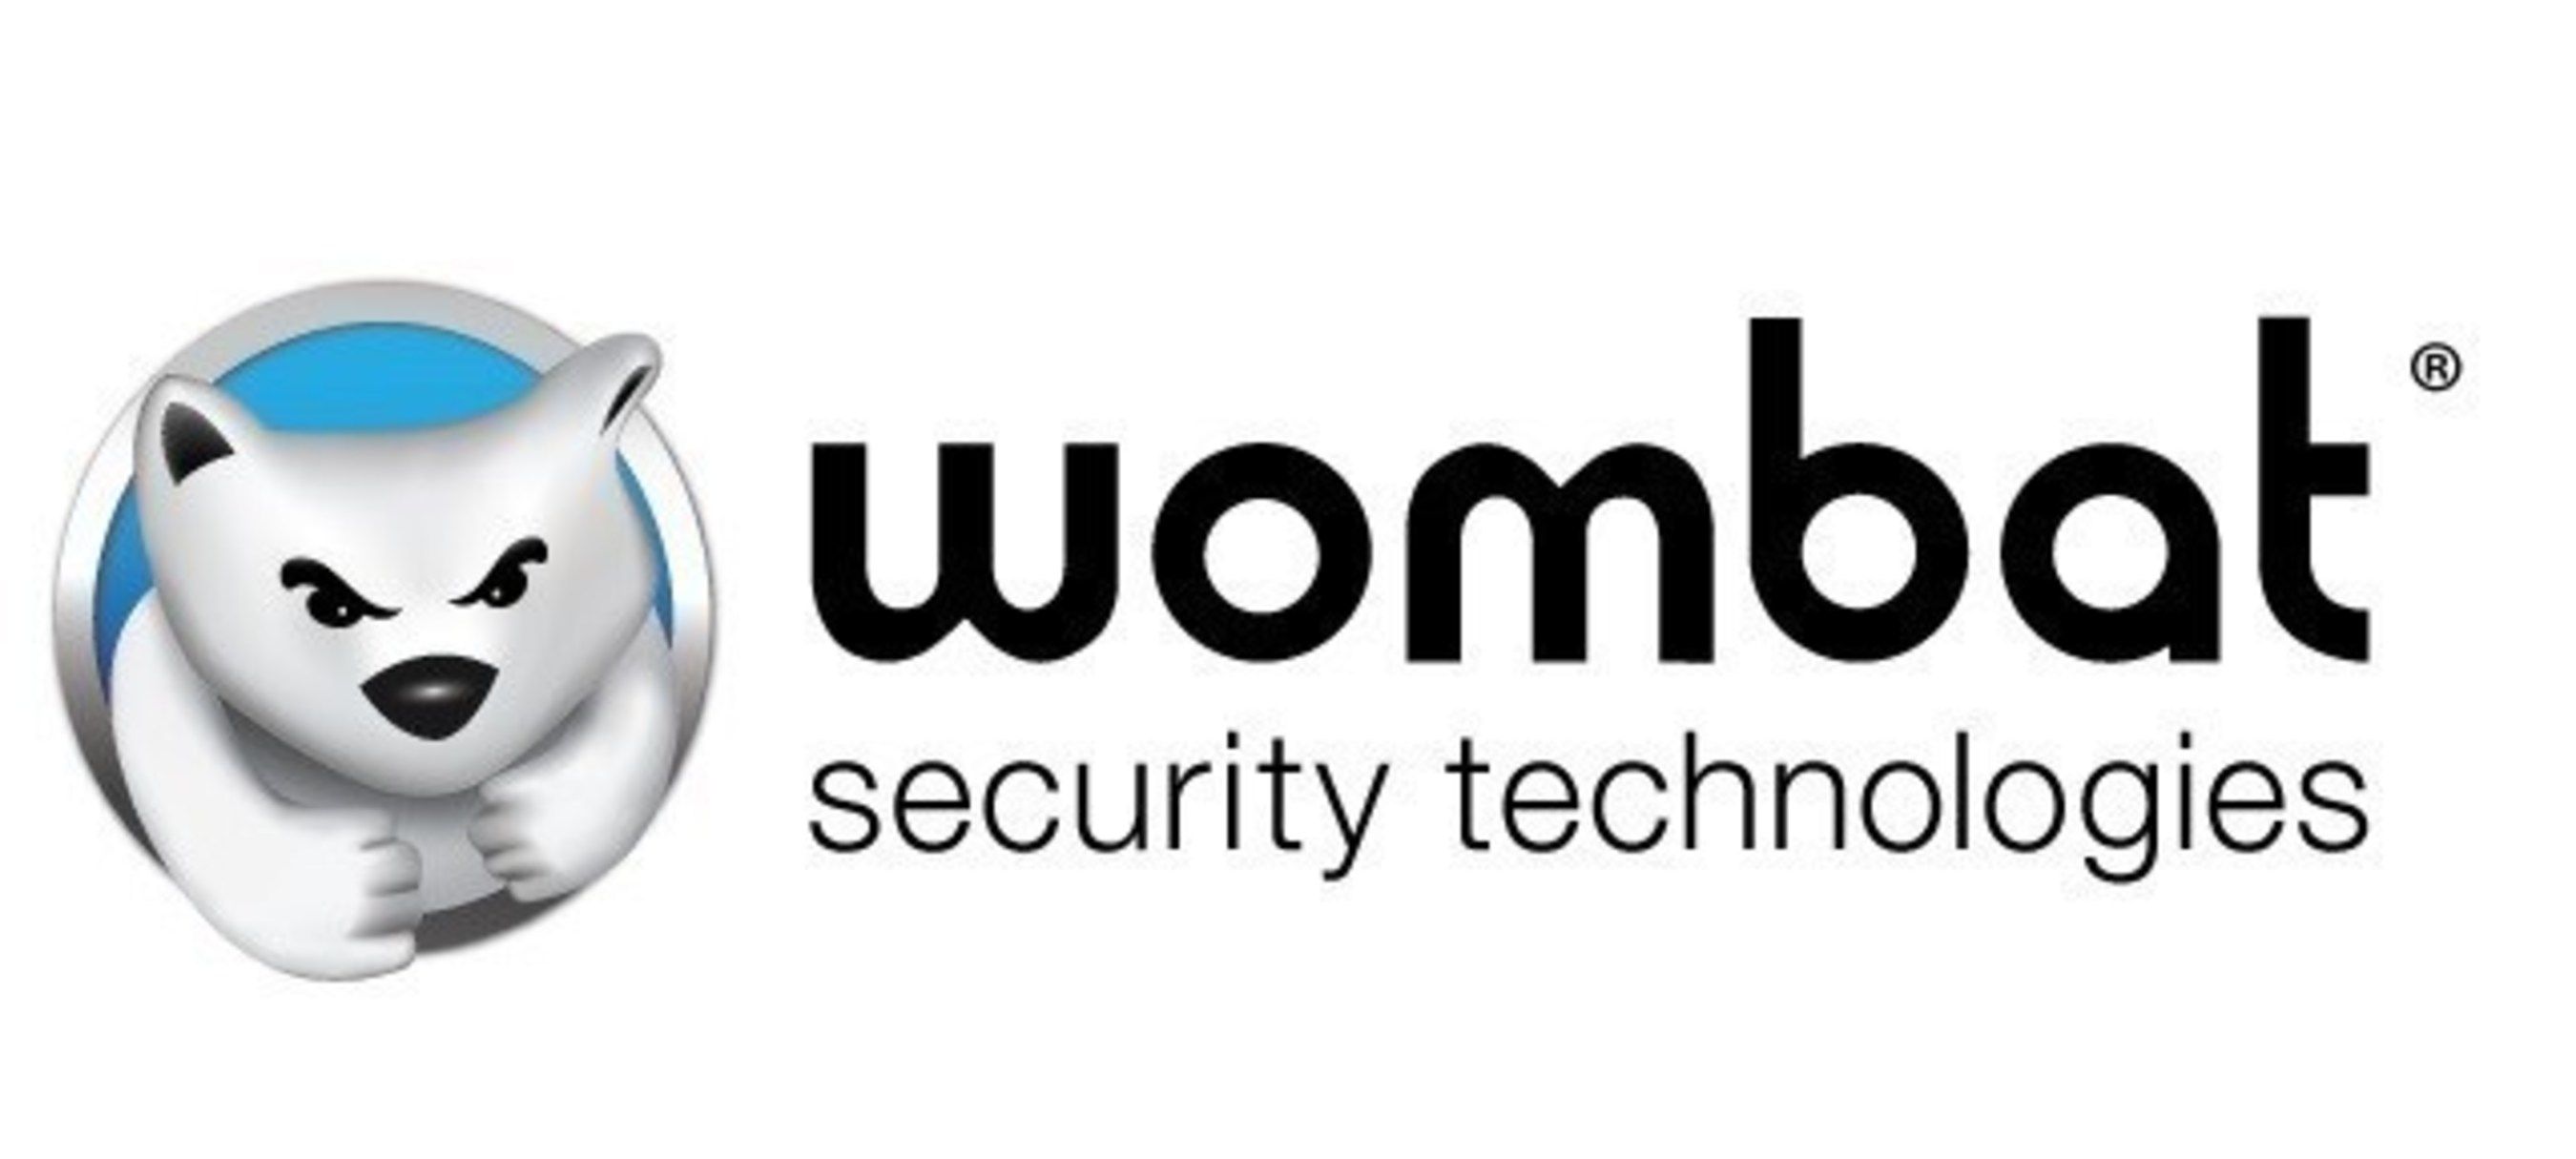 Wombat Security Technologies (PRNewsFoto/Wombat Security Technologies) (PRNewsFoto/Wombat Security Technologies)